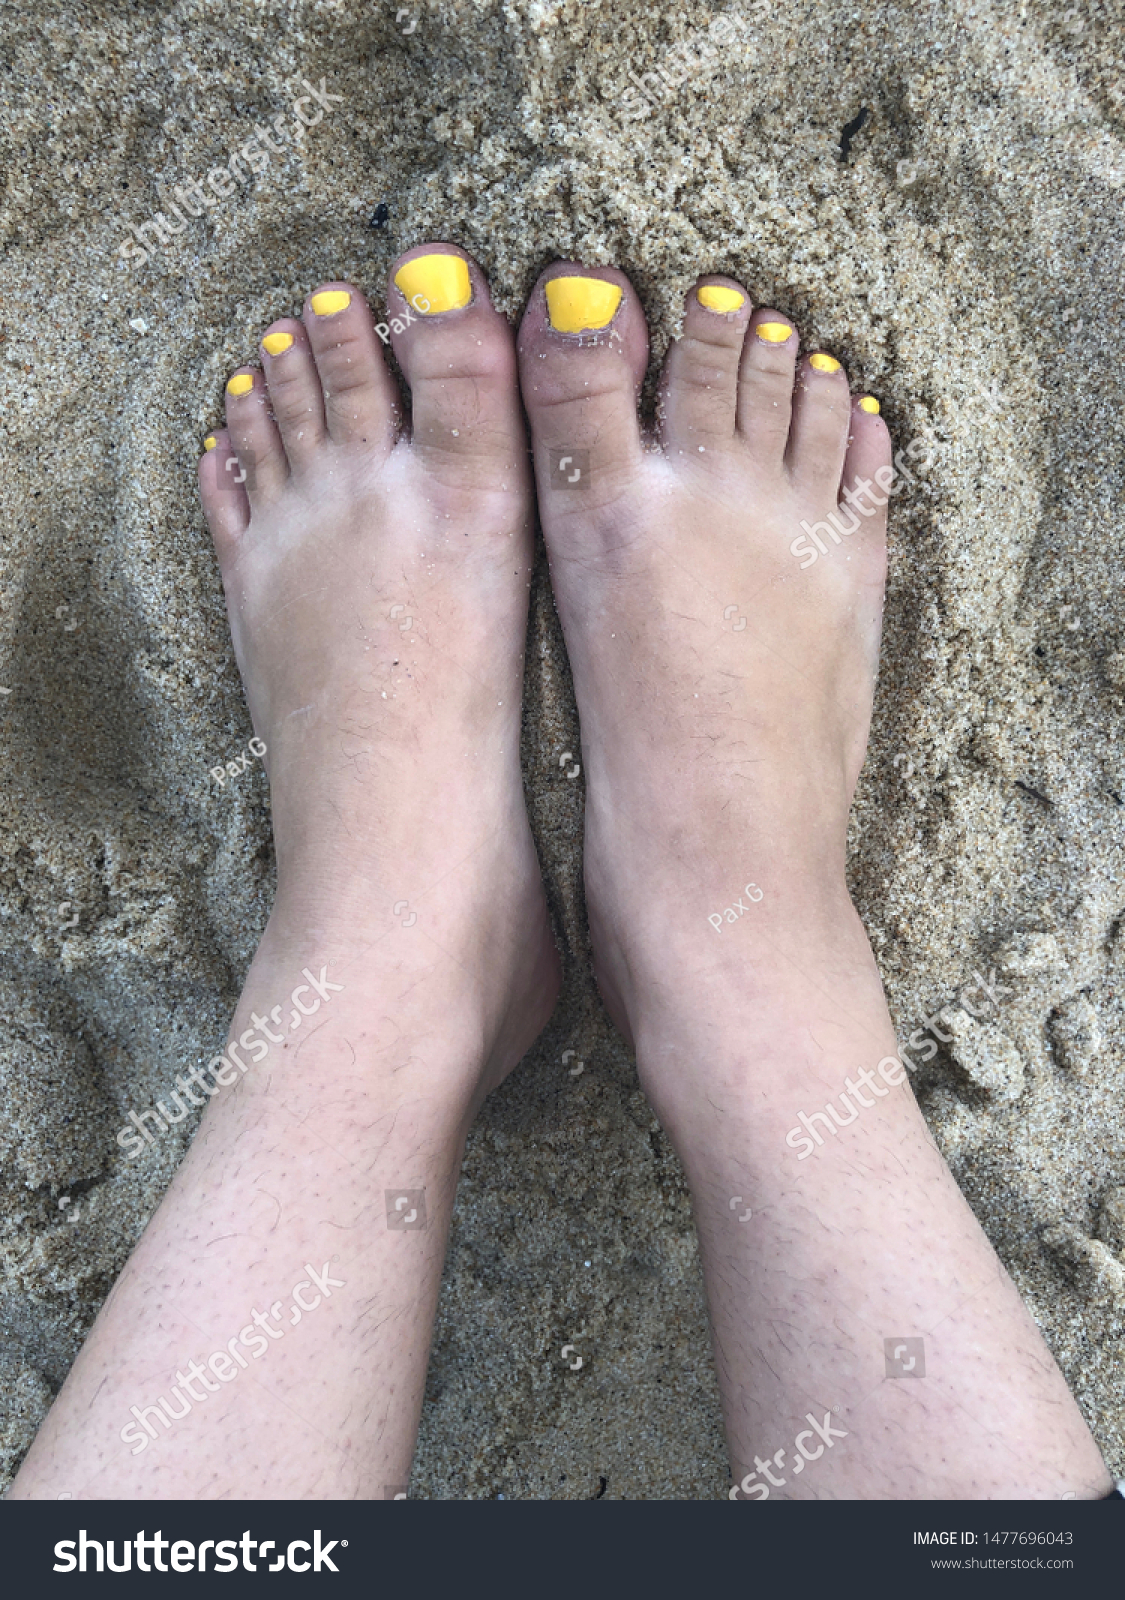 Photos of pretty feet